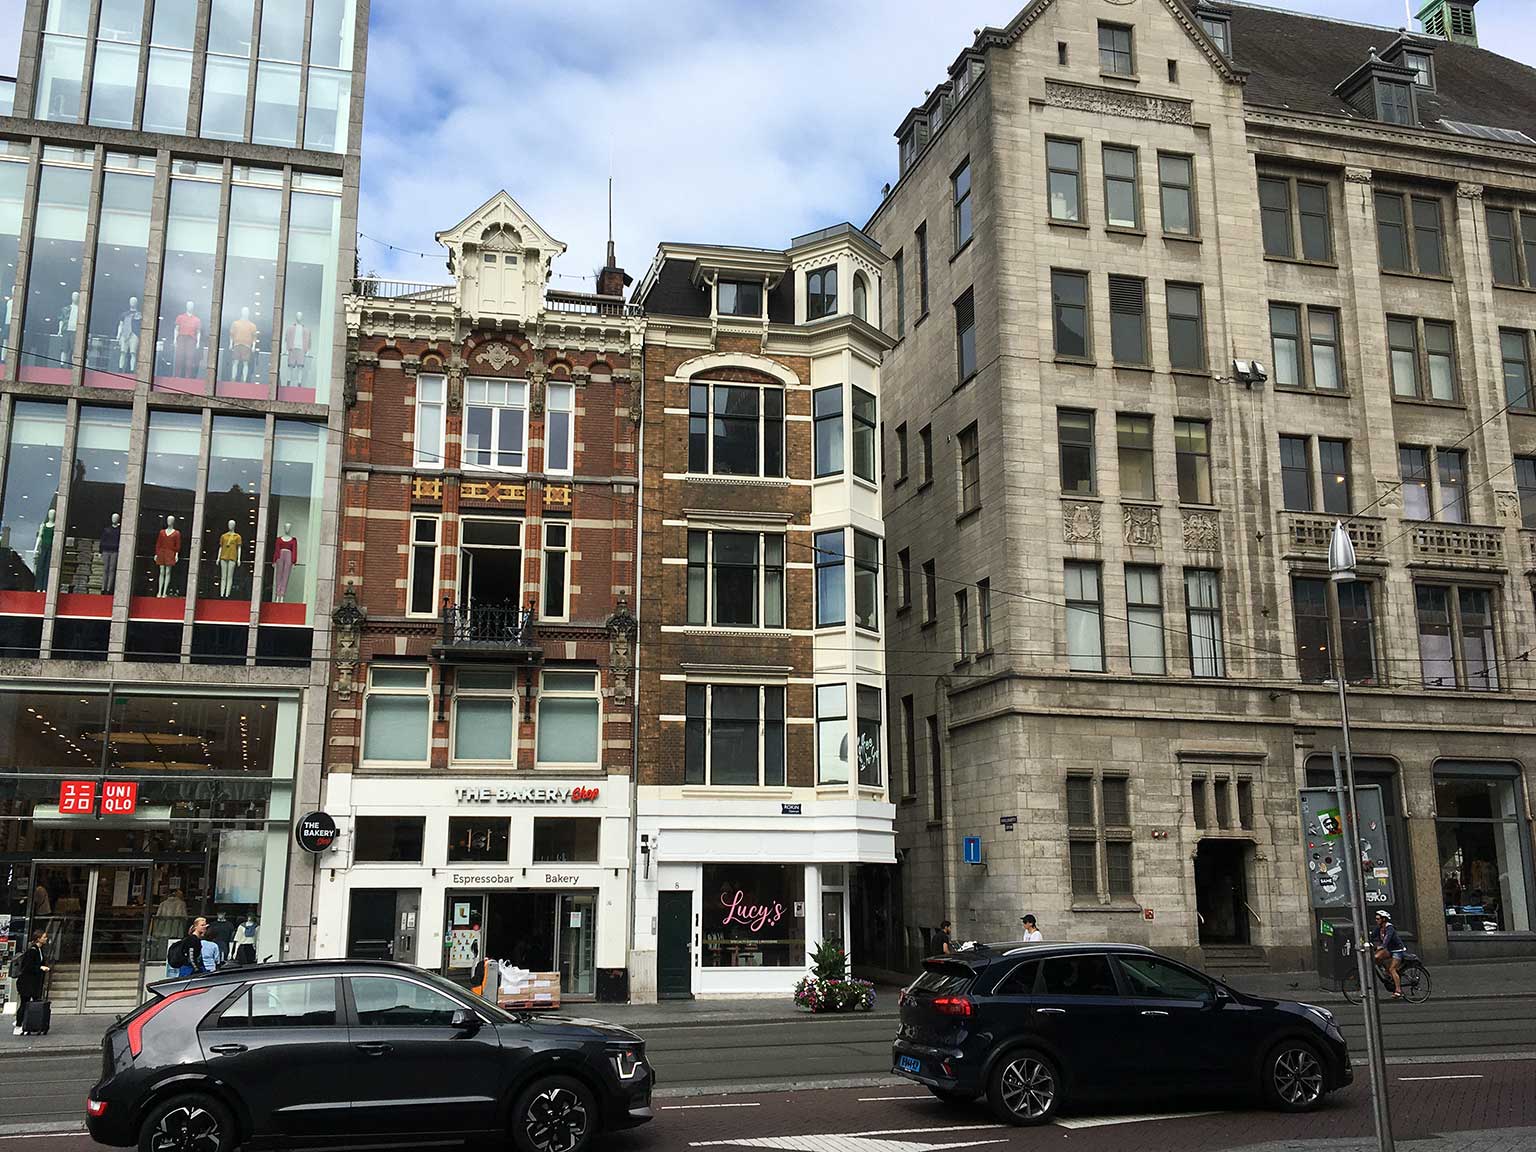 From right to left: Peek & Cloppenburg, Kromelleboogsteeg, Rokin 8, Rokin 10, Amsterdam